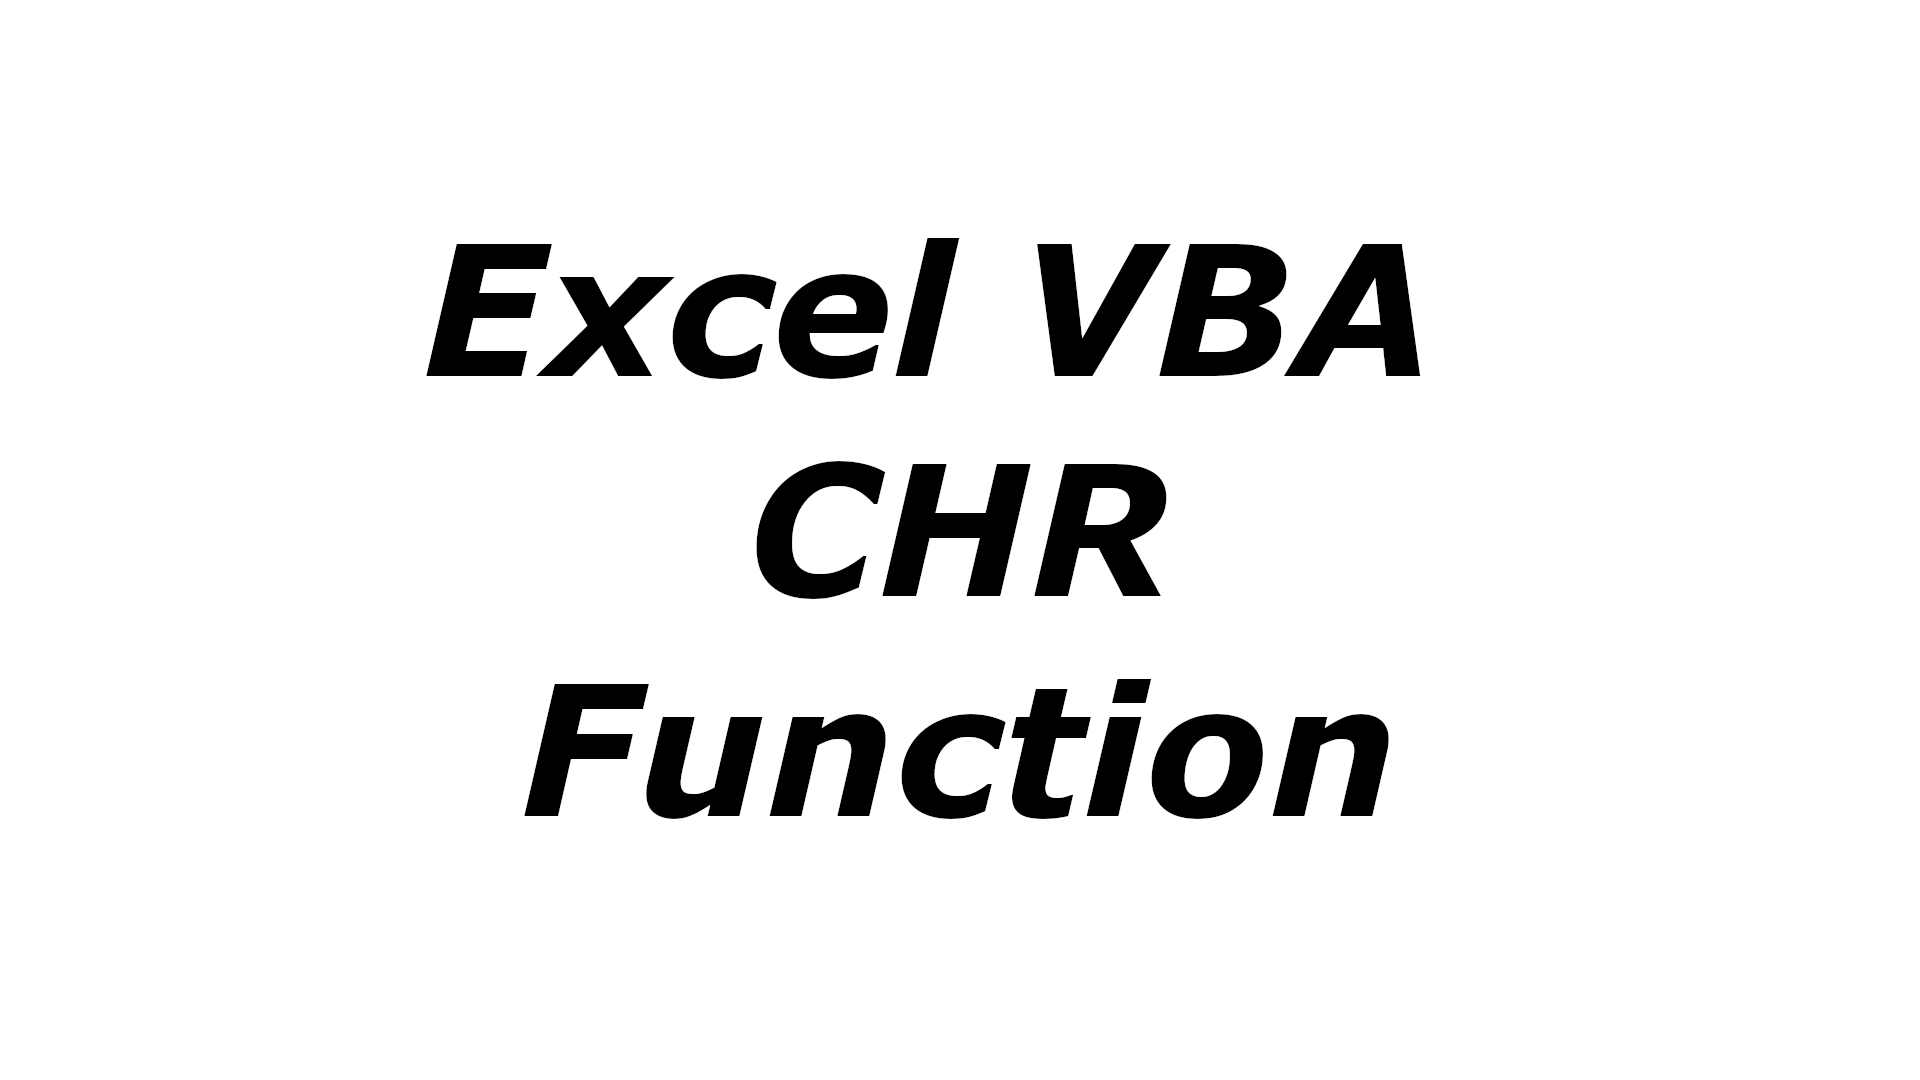 Excel VBA CHR function